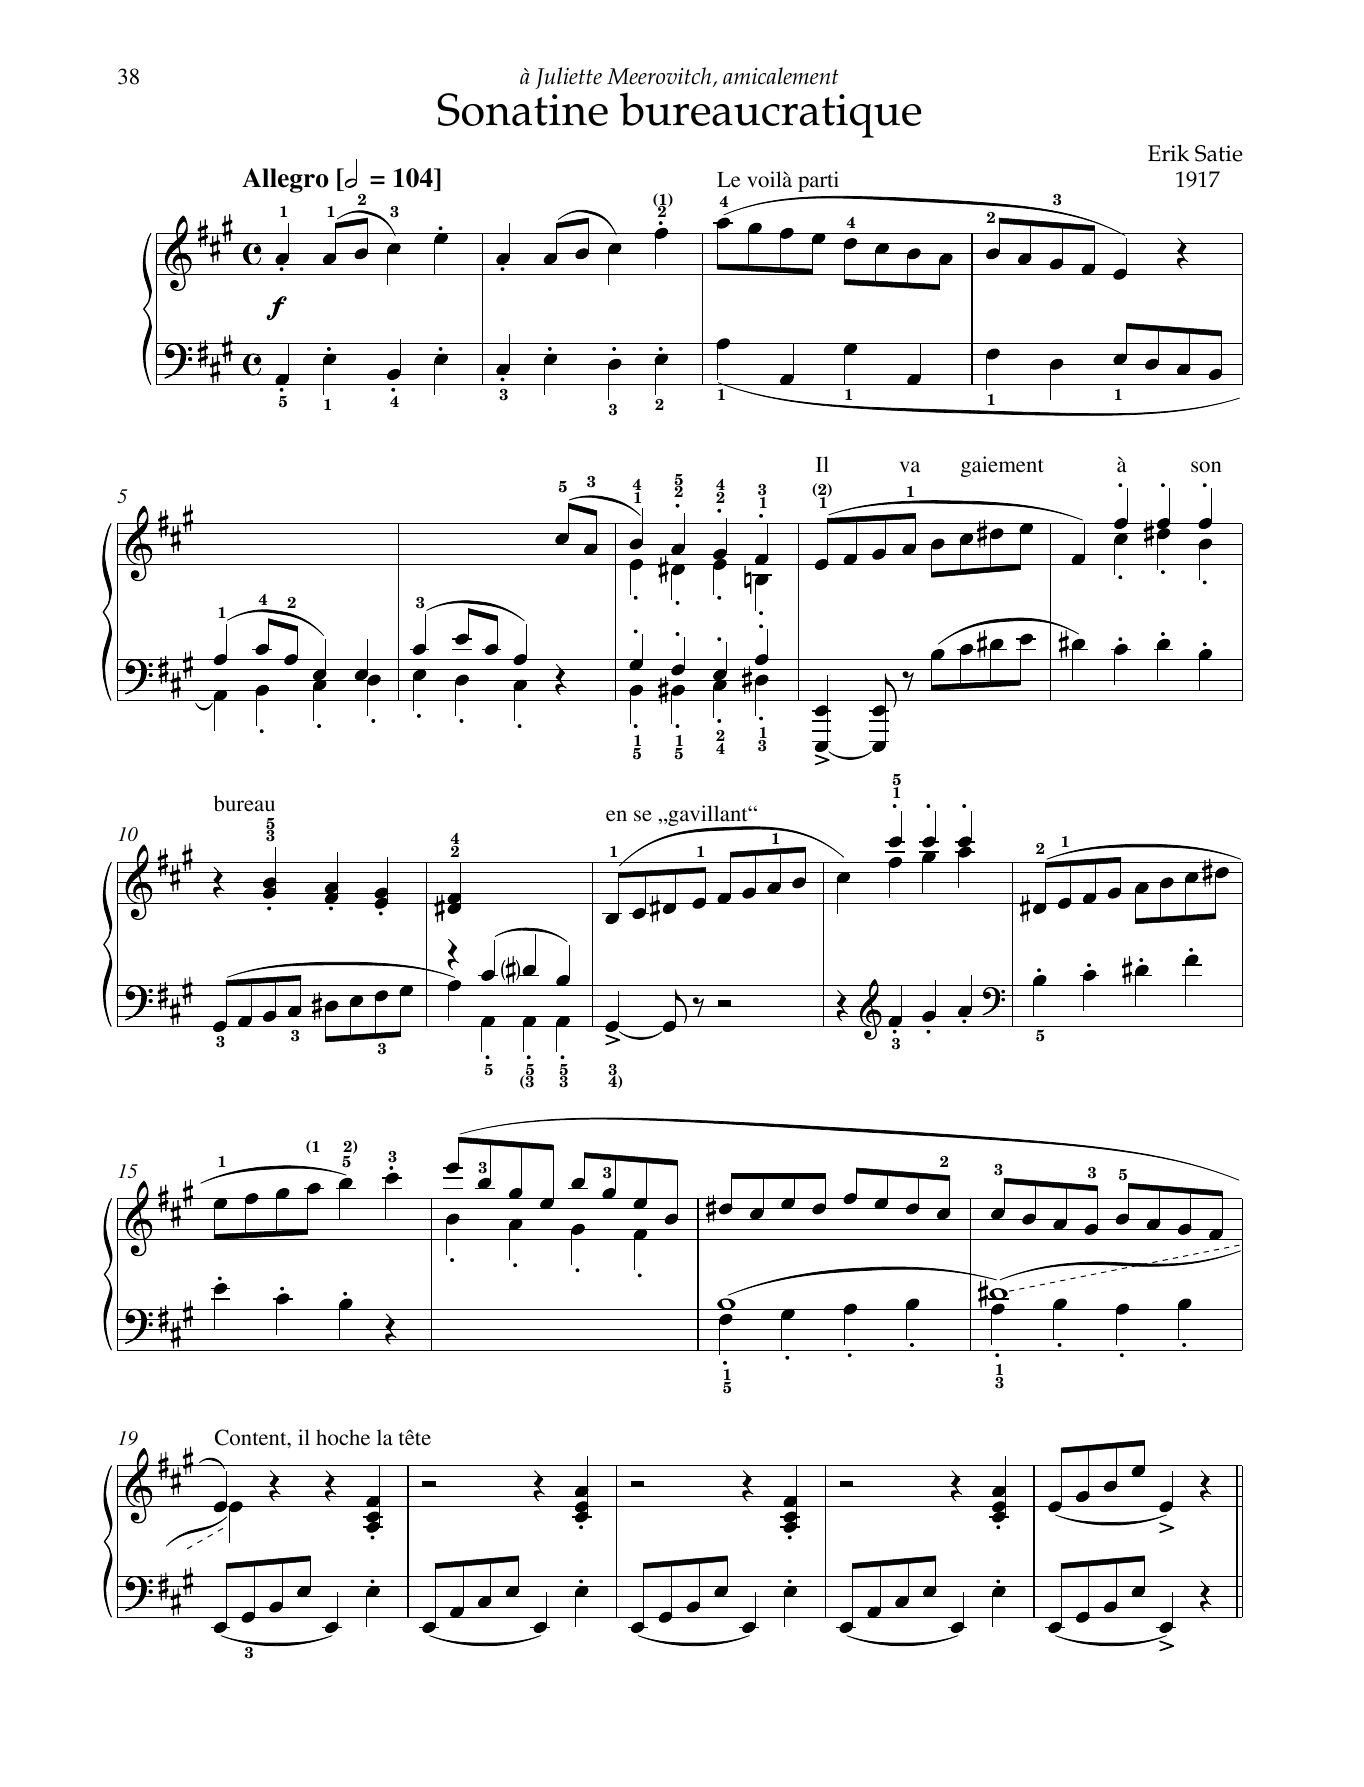 Erik Satie Sonatine bureaucratique Sheet Music Notes & Chords for Piano Solo - Download or Print PDF